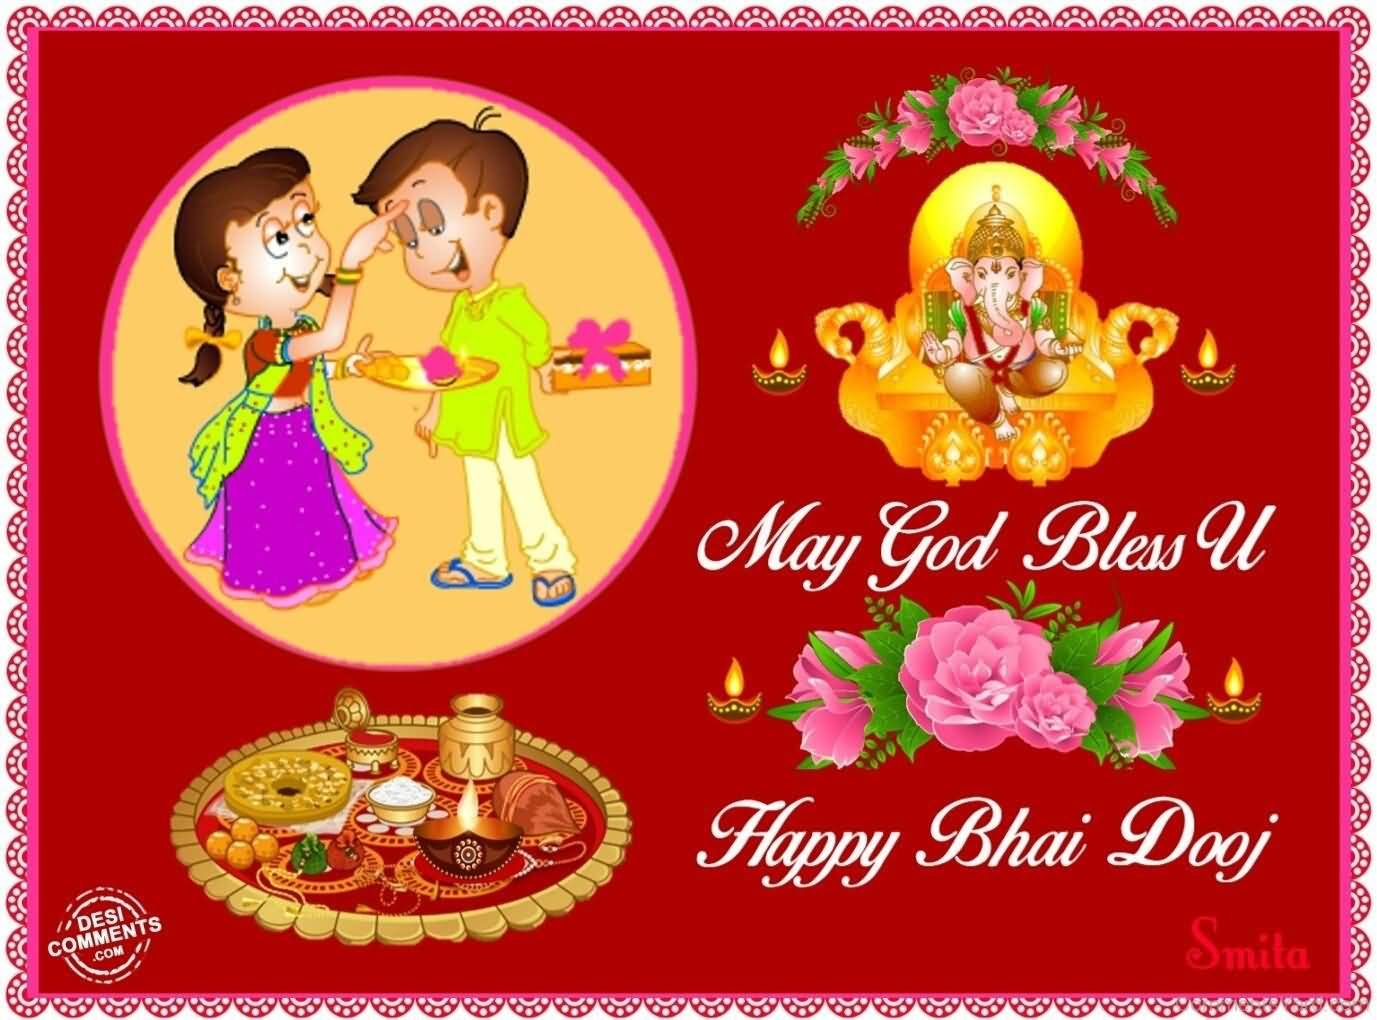 May God Bless You Happy Bhai Dooj Greeting Card